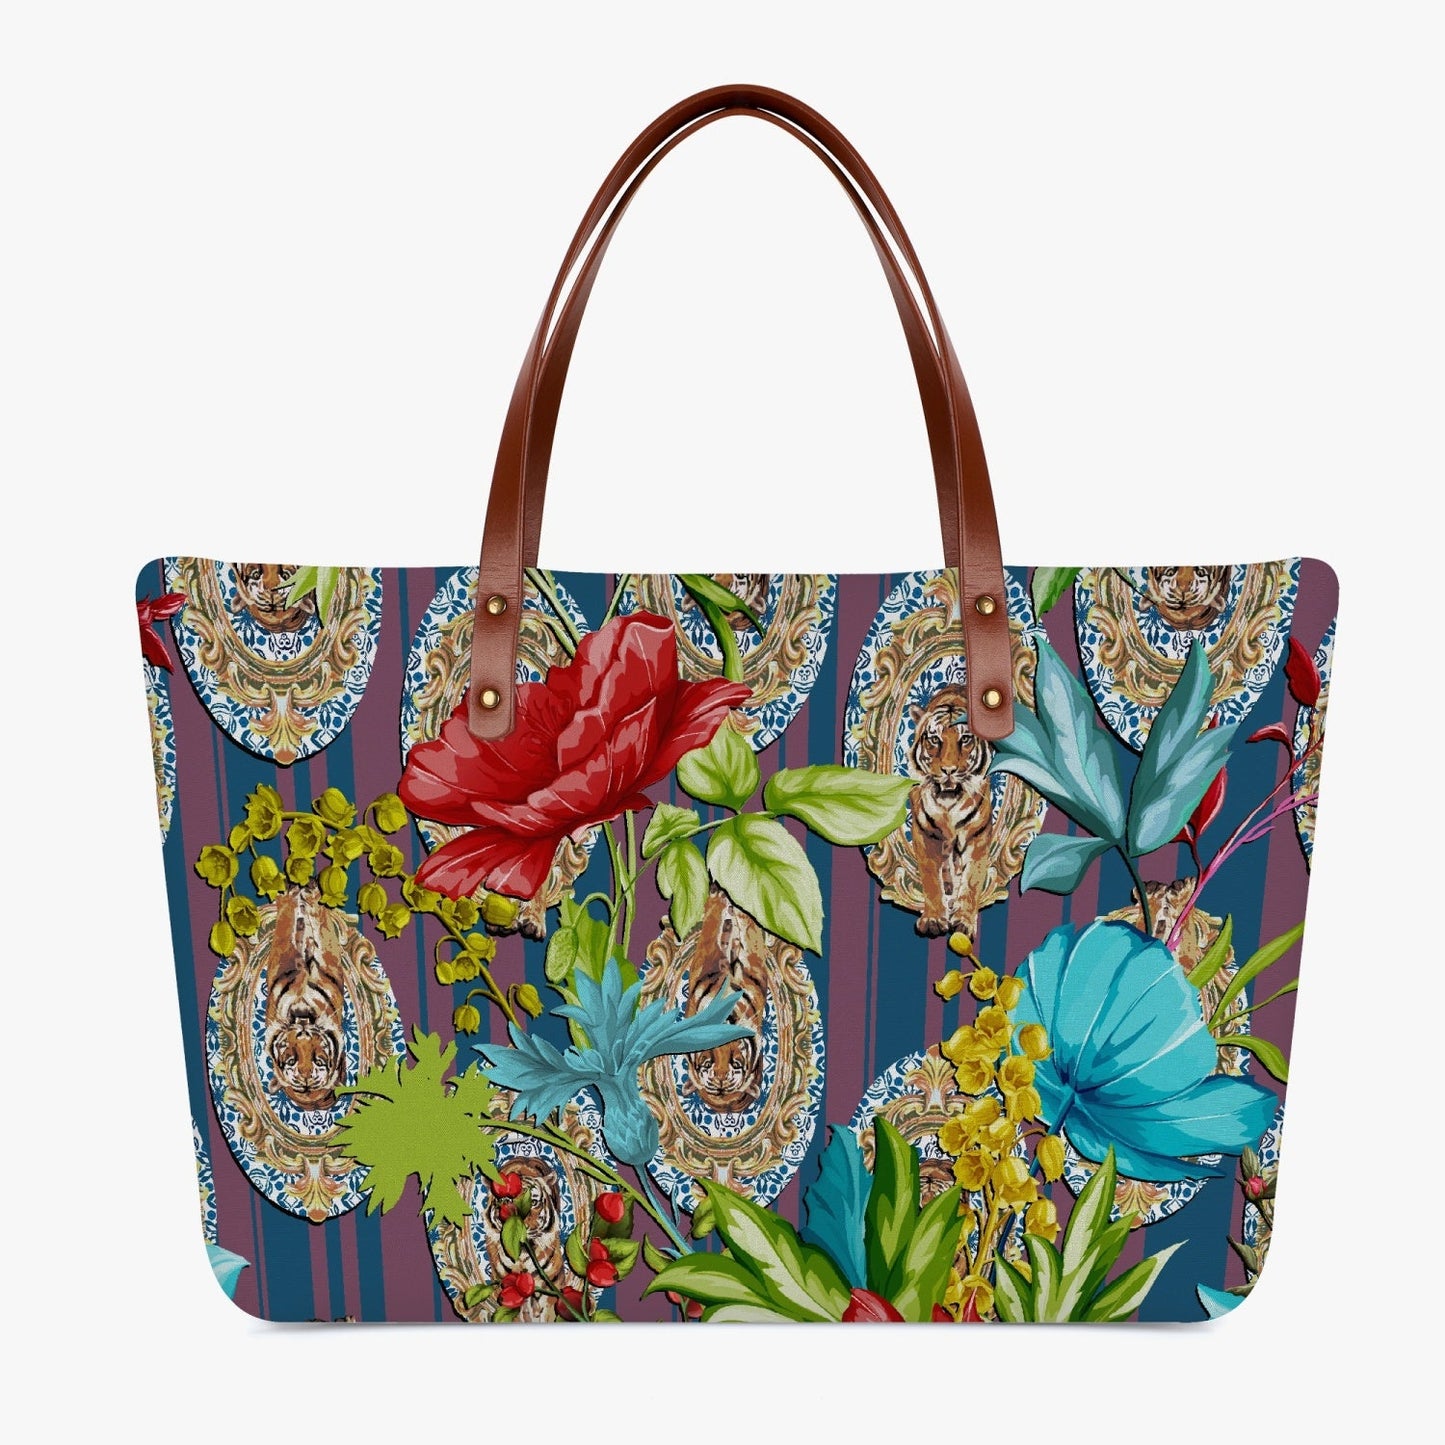 Flower Printed Cloth Tote Bag